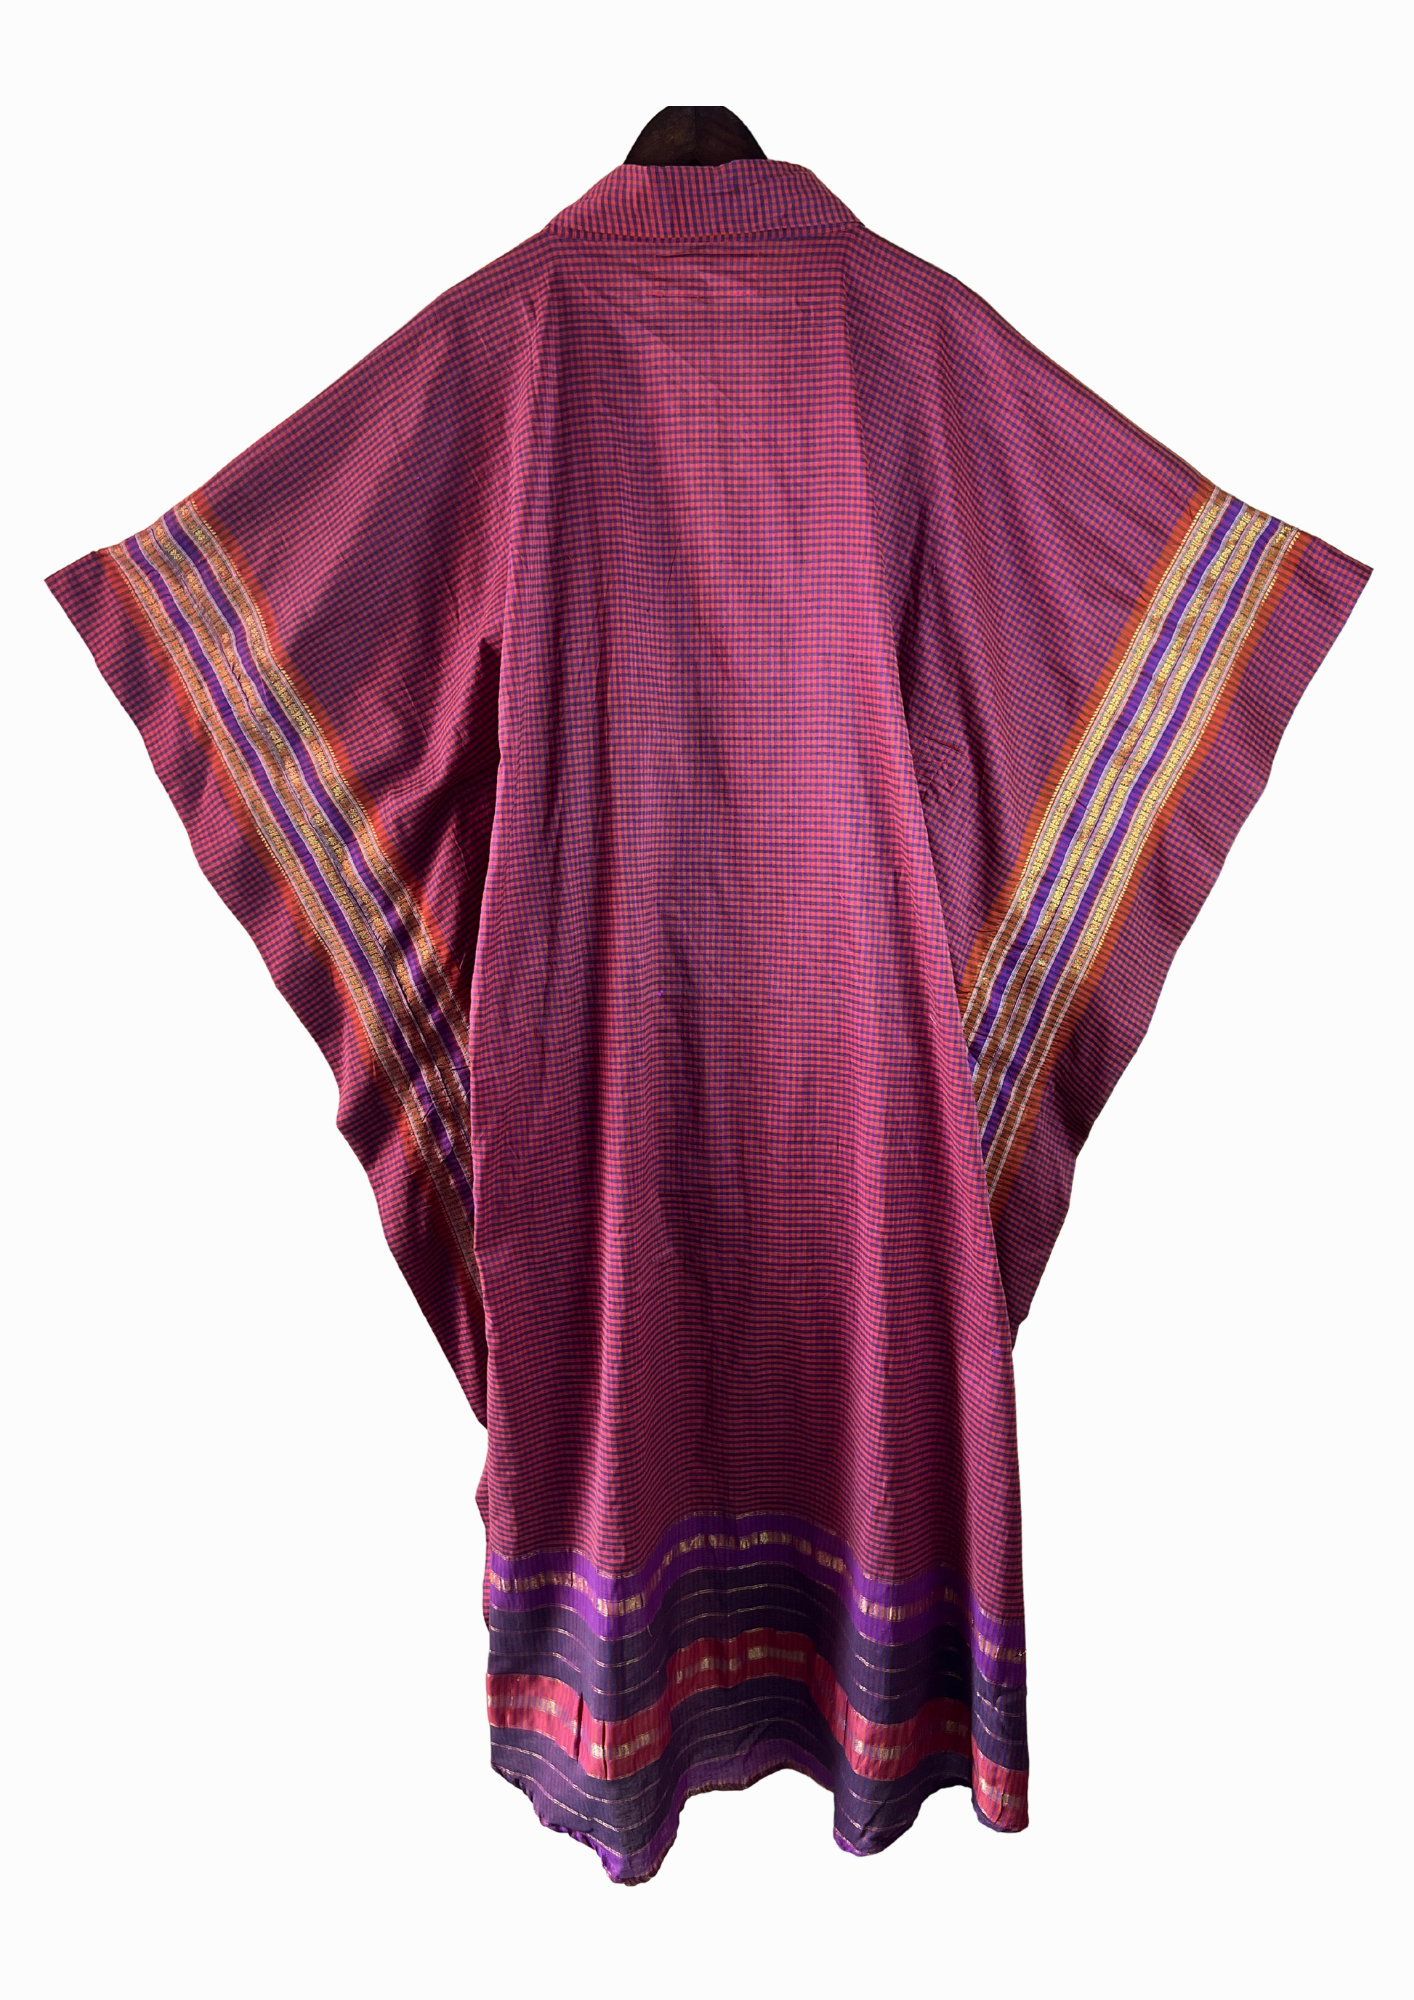 Silk Cotton Saree Kaftan Dress - Gingham Checks and Gold Embroidery